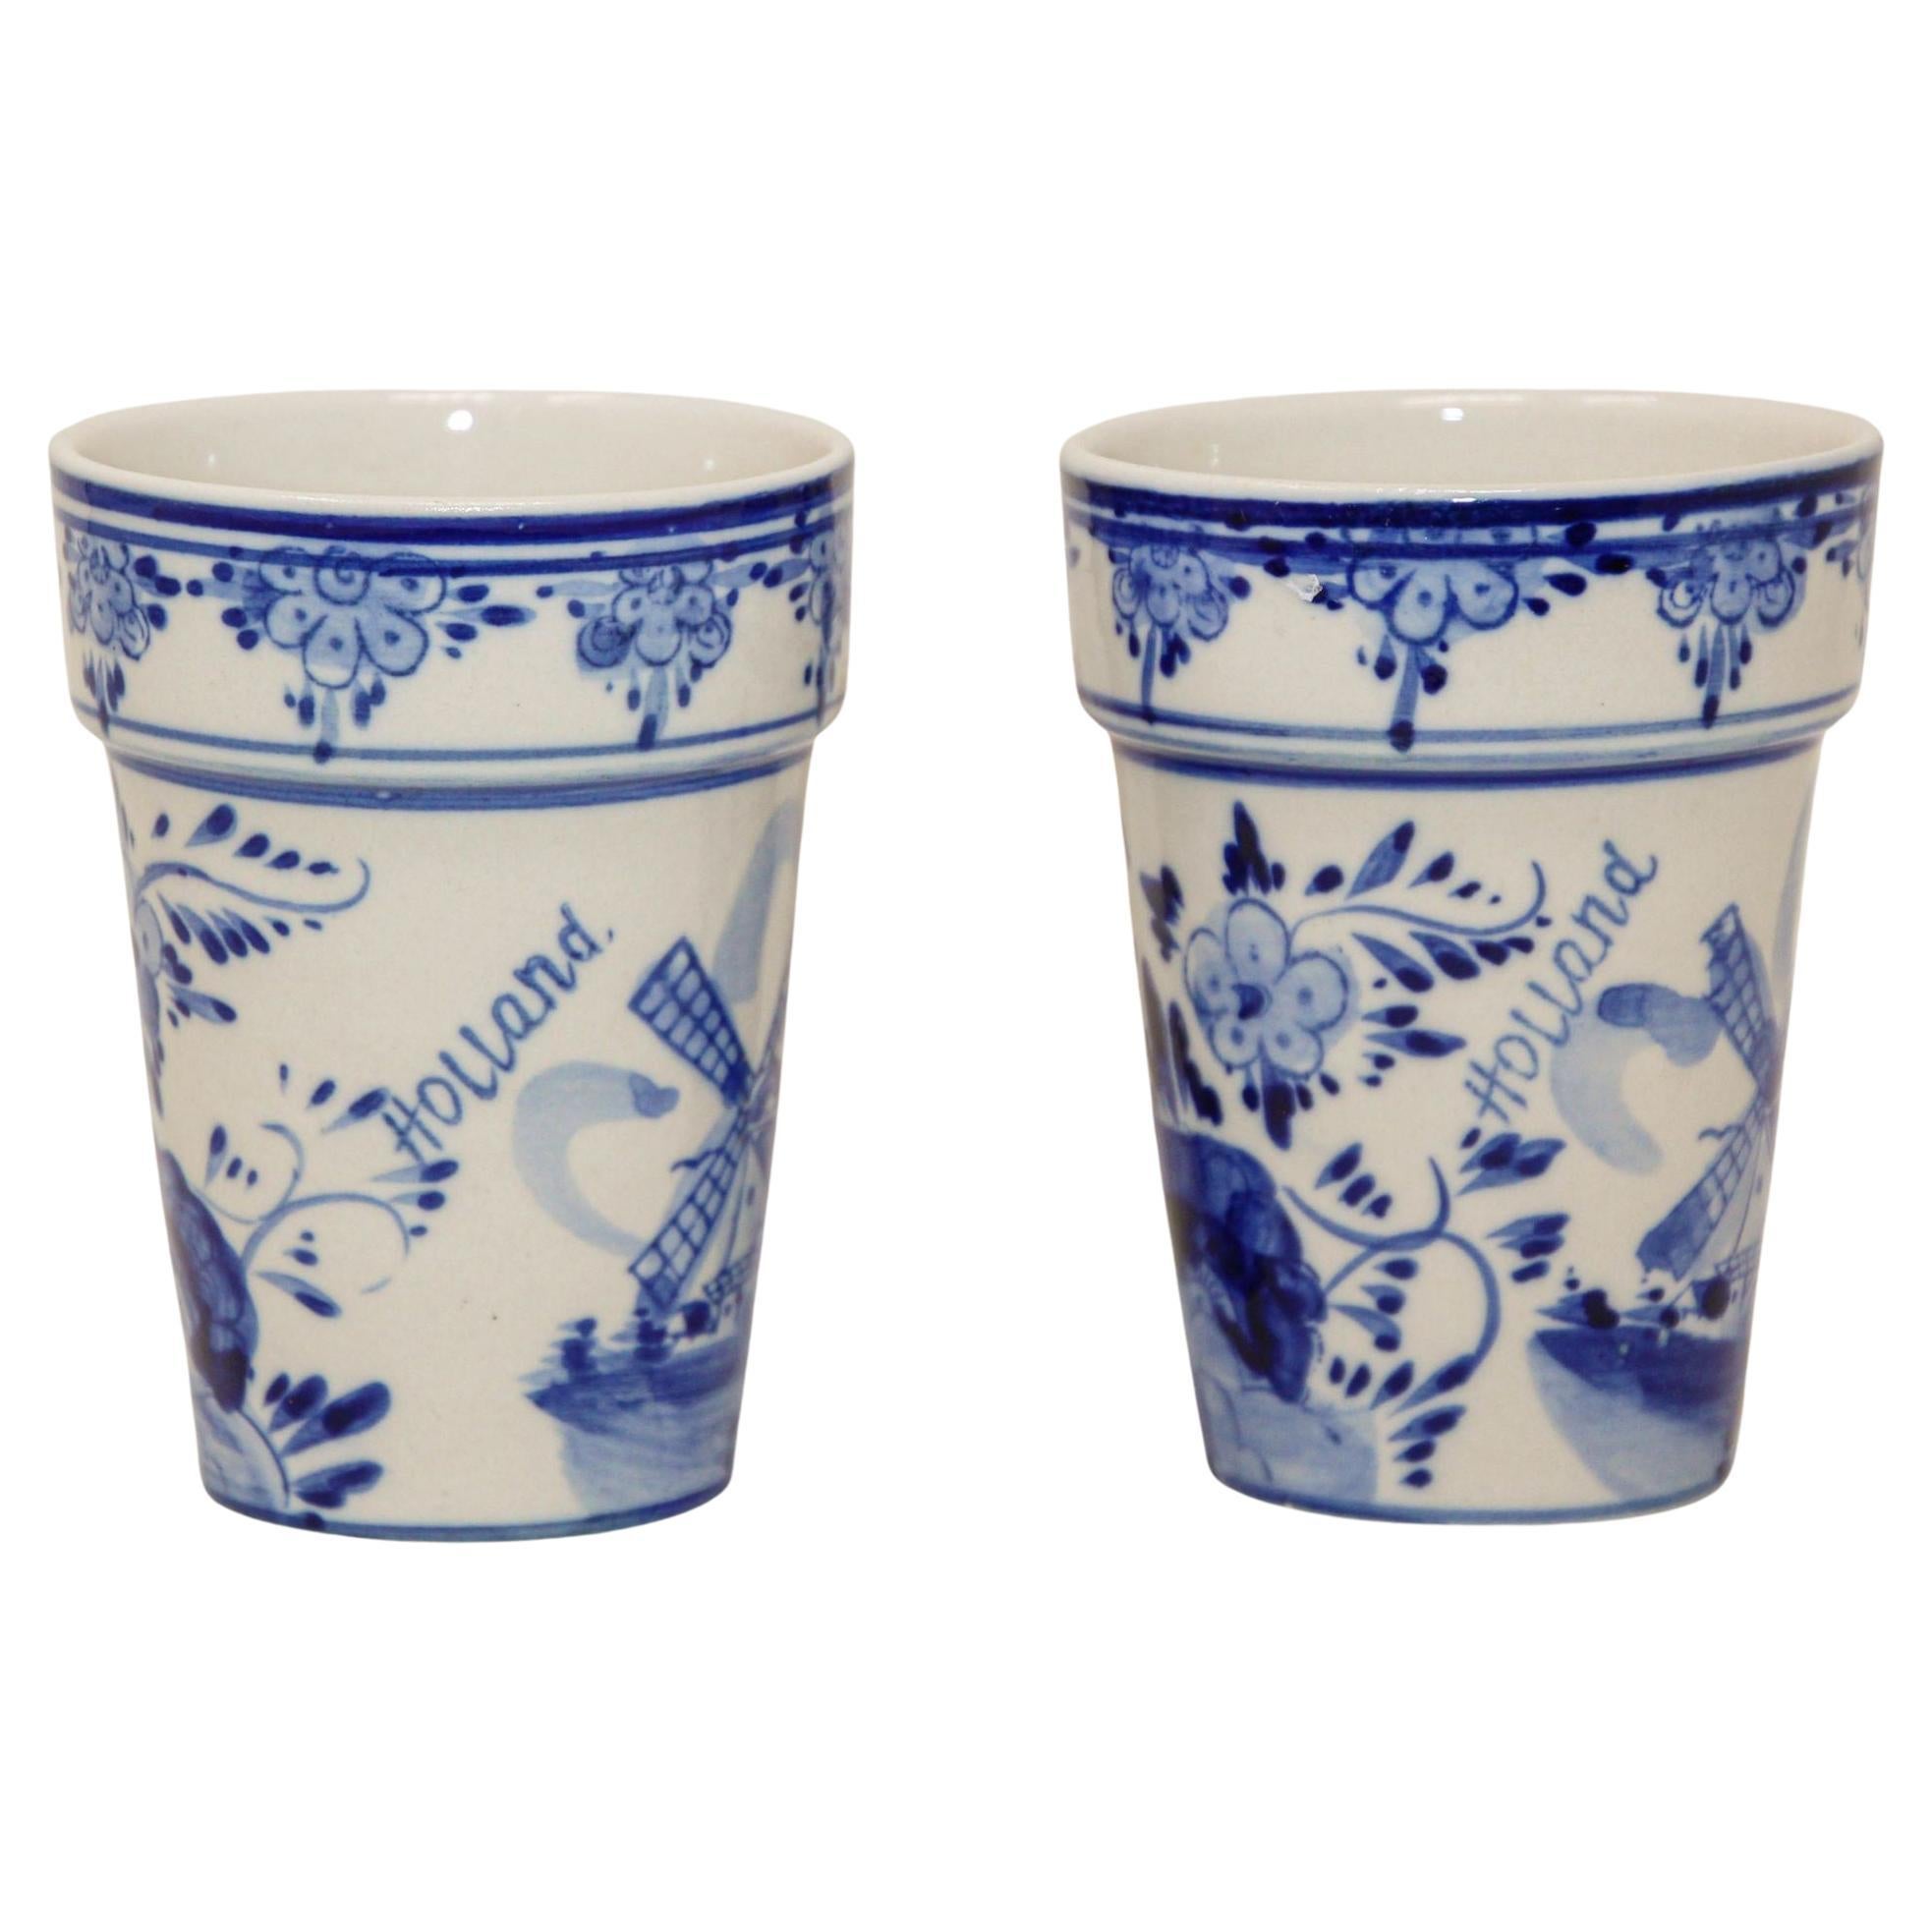 Vintage Delft Ceramic Hand Painted Blue Flower Pots Holland Delftware